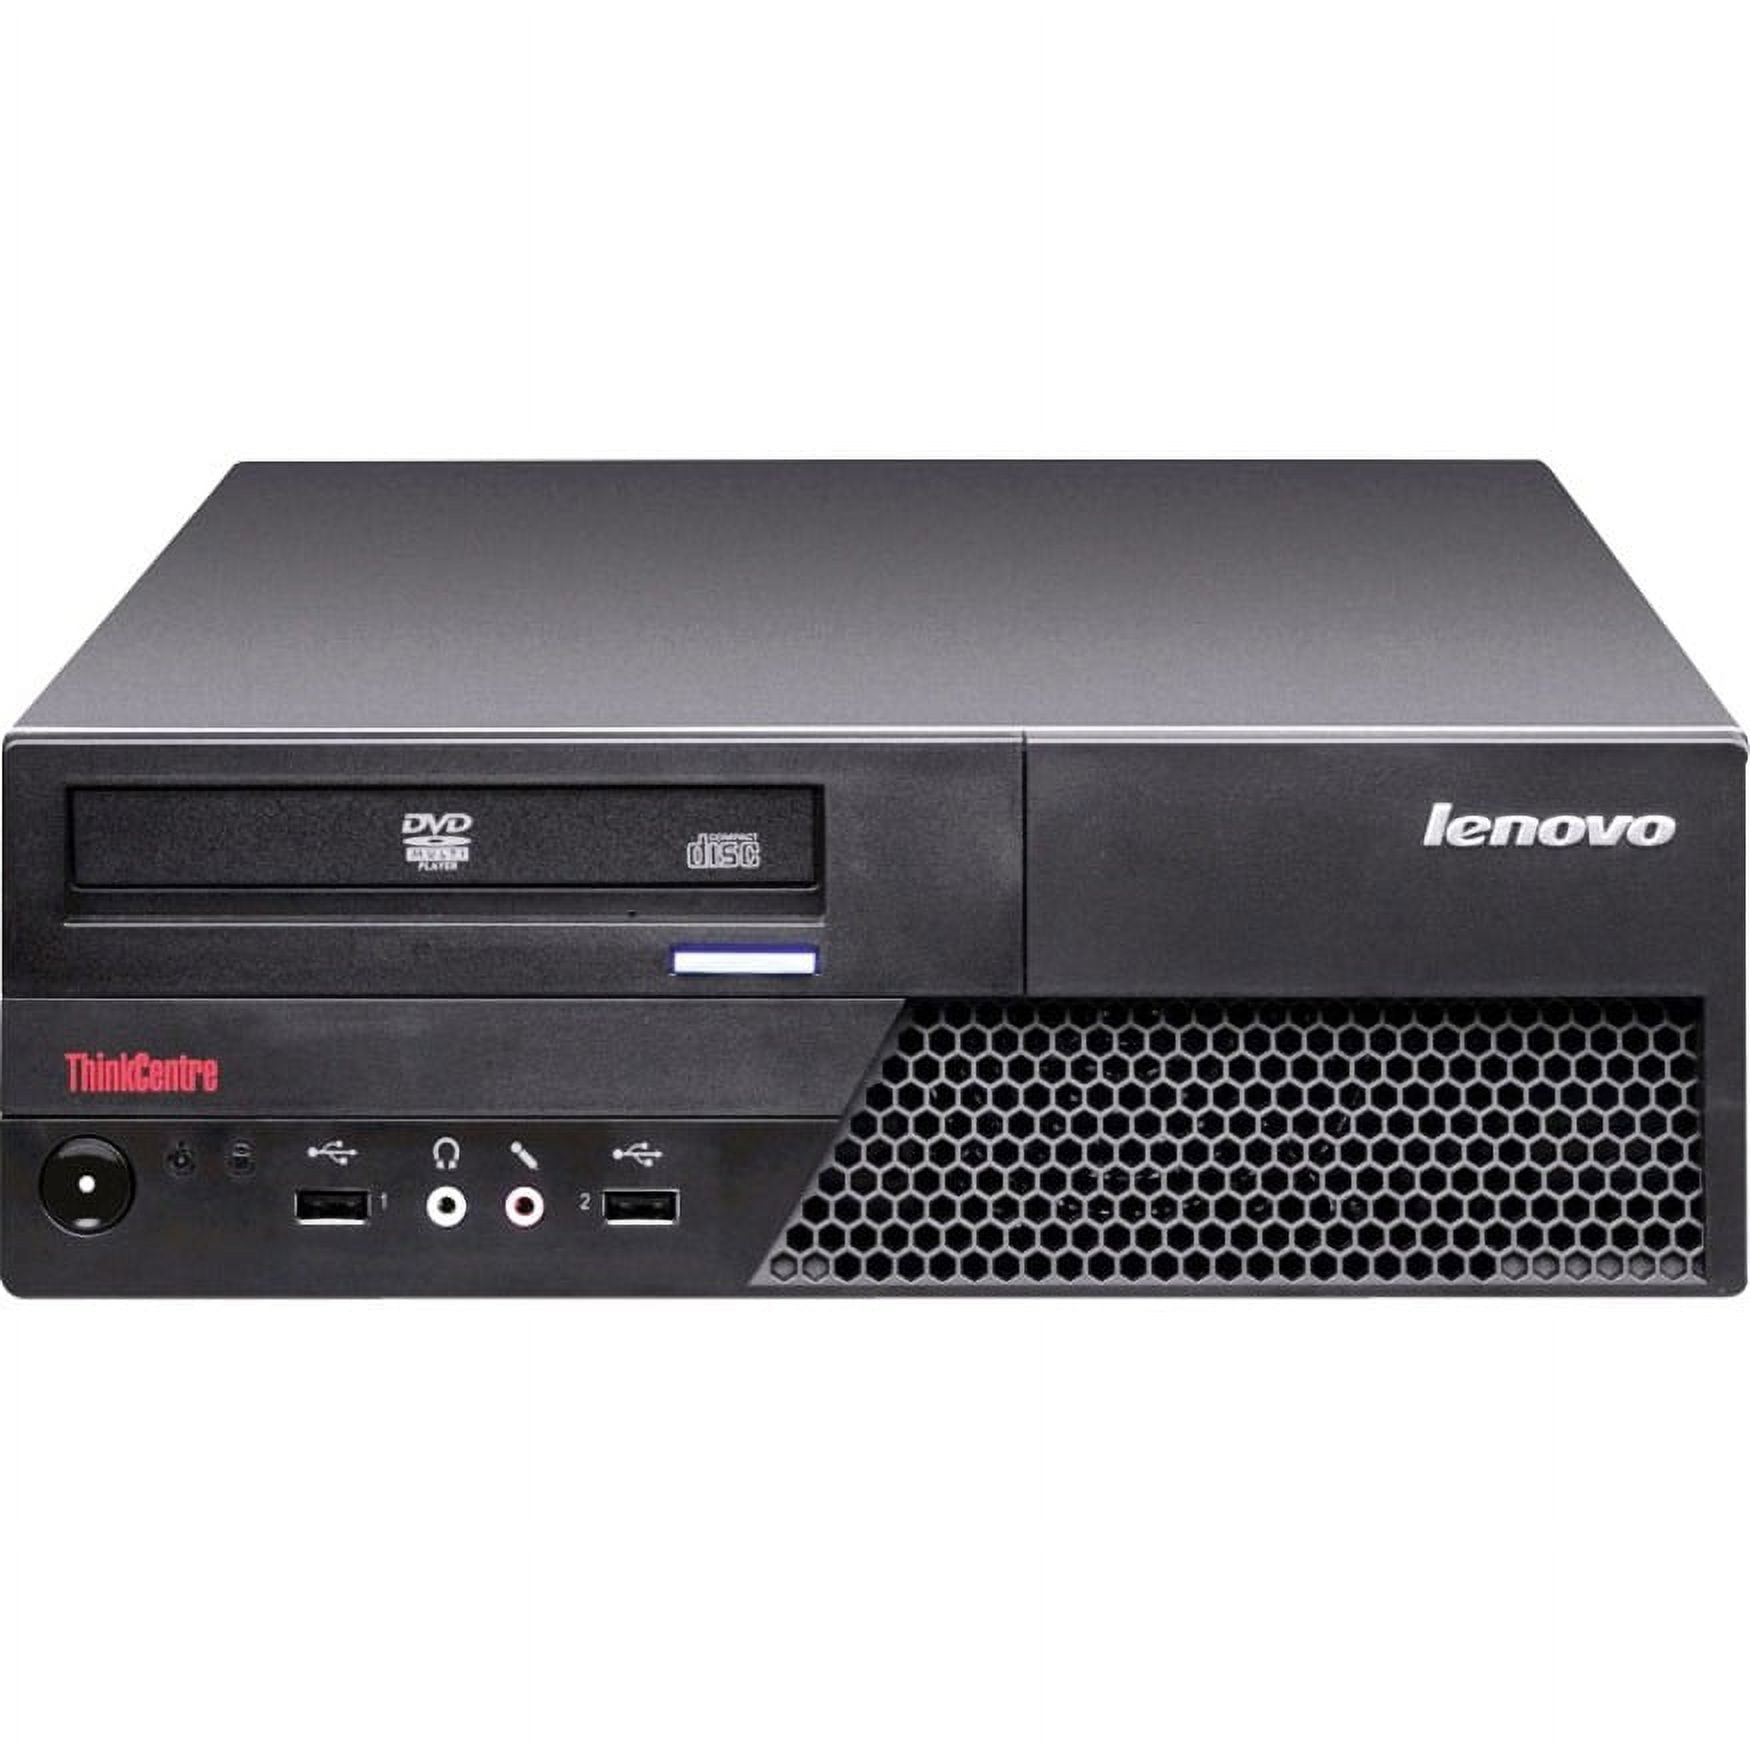 Lenovo ThinkCentre M58p Desktop Computer, Intel Core 2 Duo Dual-core (2  Core) 2.93 GHz, 2 GB RAM DDR3 SDRAM, 160 GB HDD, Small Form Factor